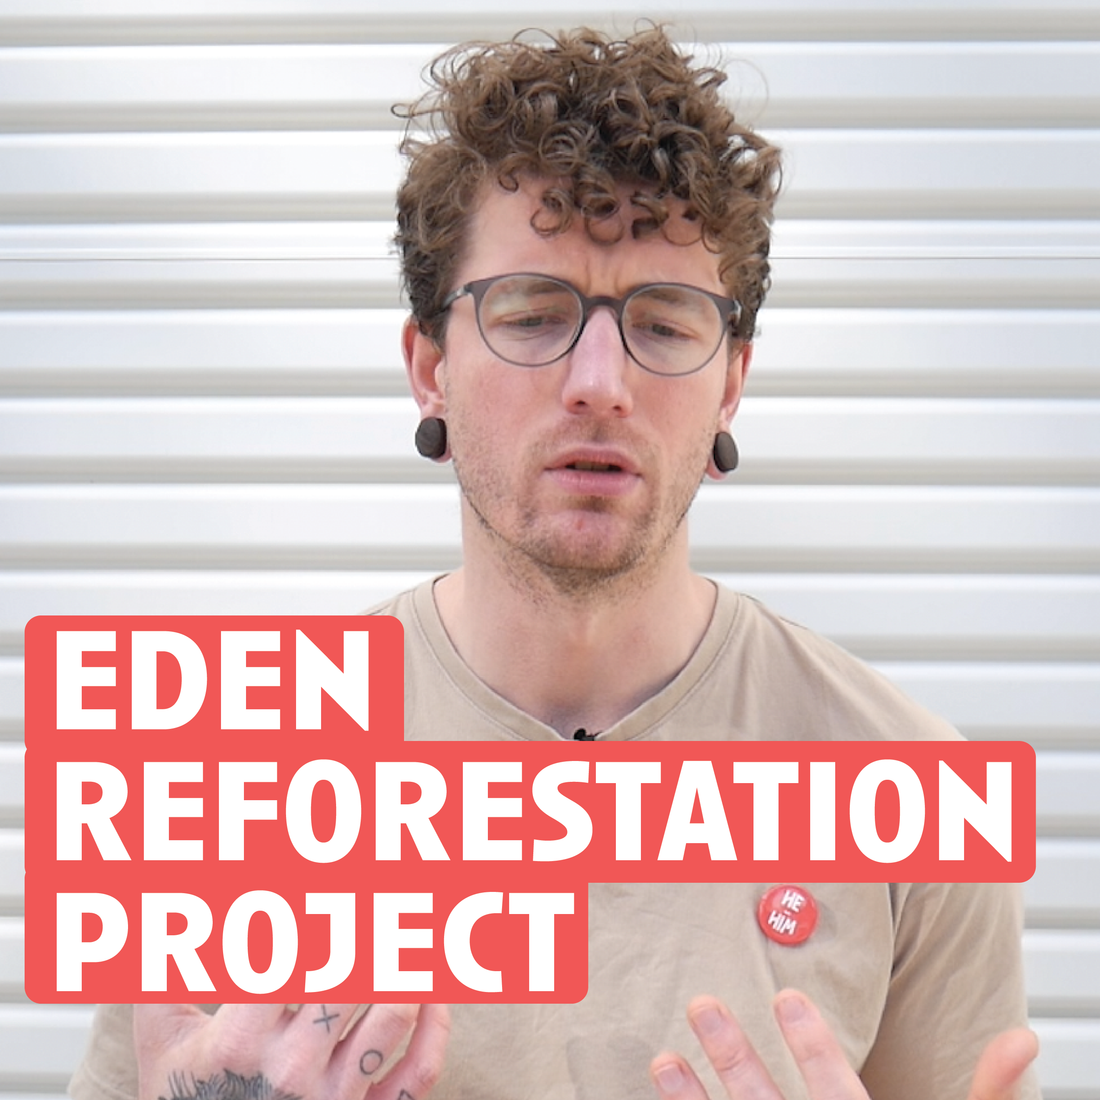 [Video Transcript] The Eden Reforestation Project